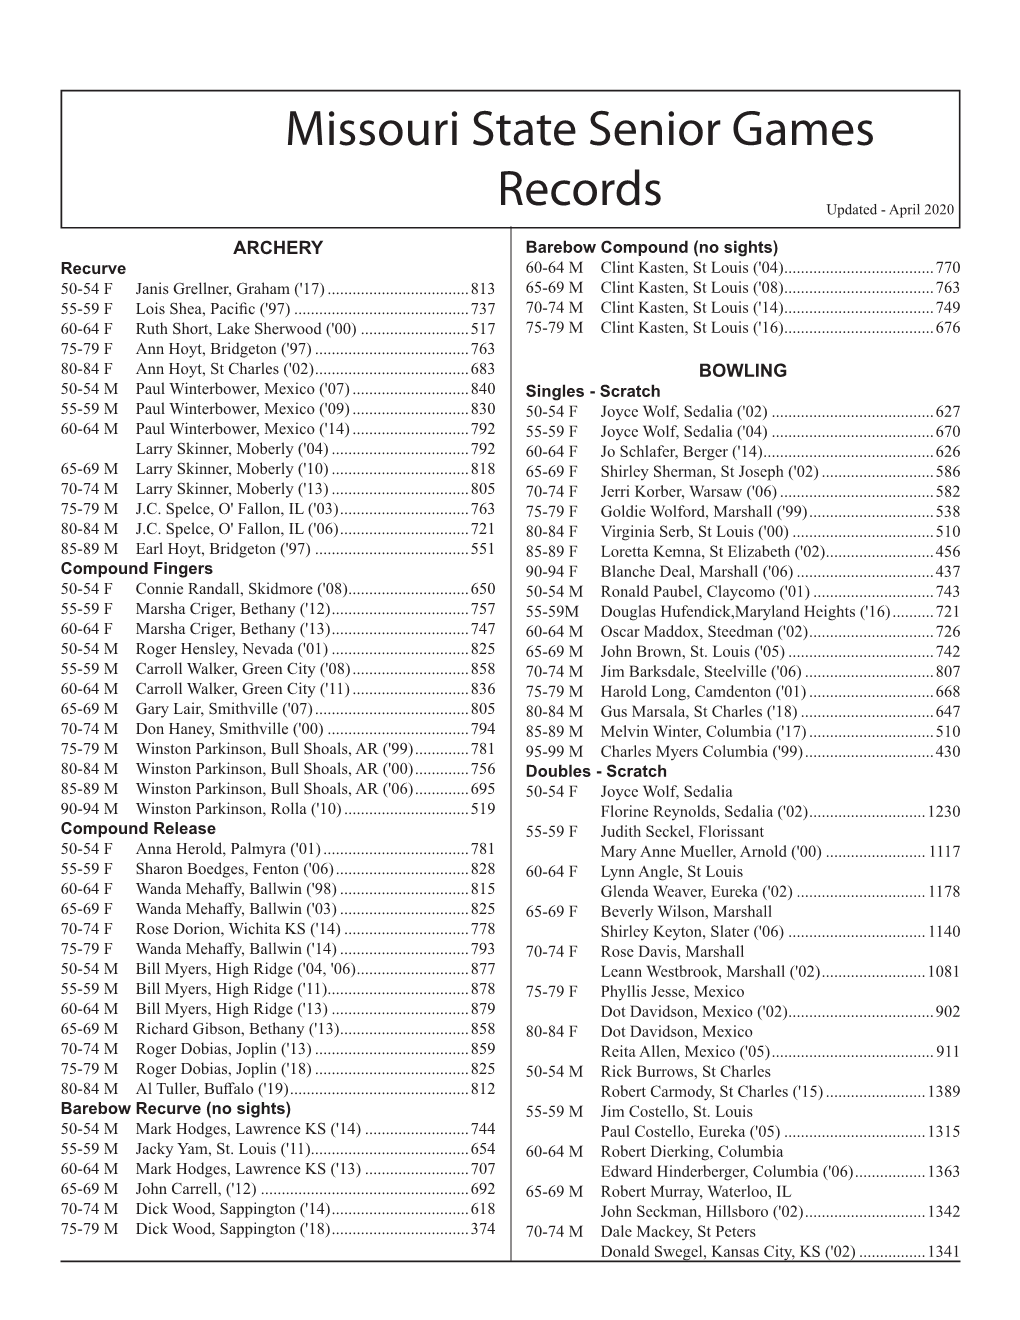 Missouri State Senior Games Records Page 2 80-84 Don's Crew ('07)